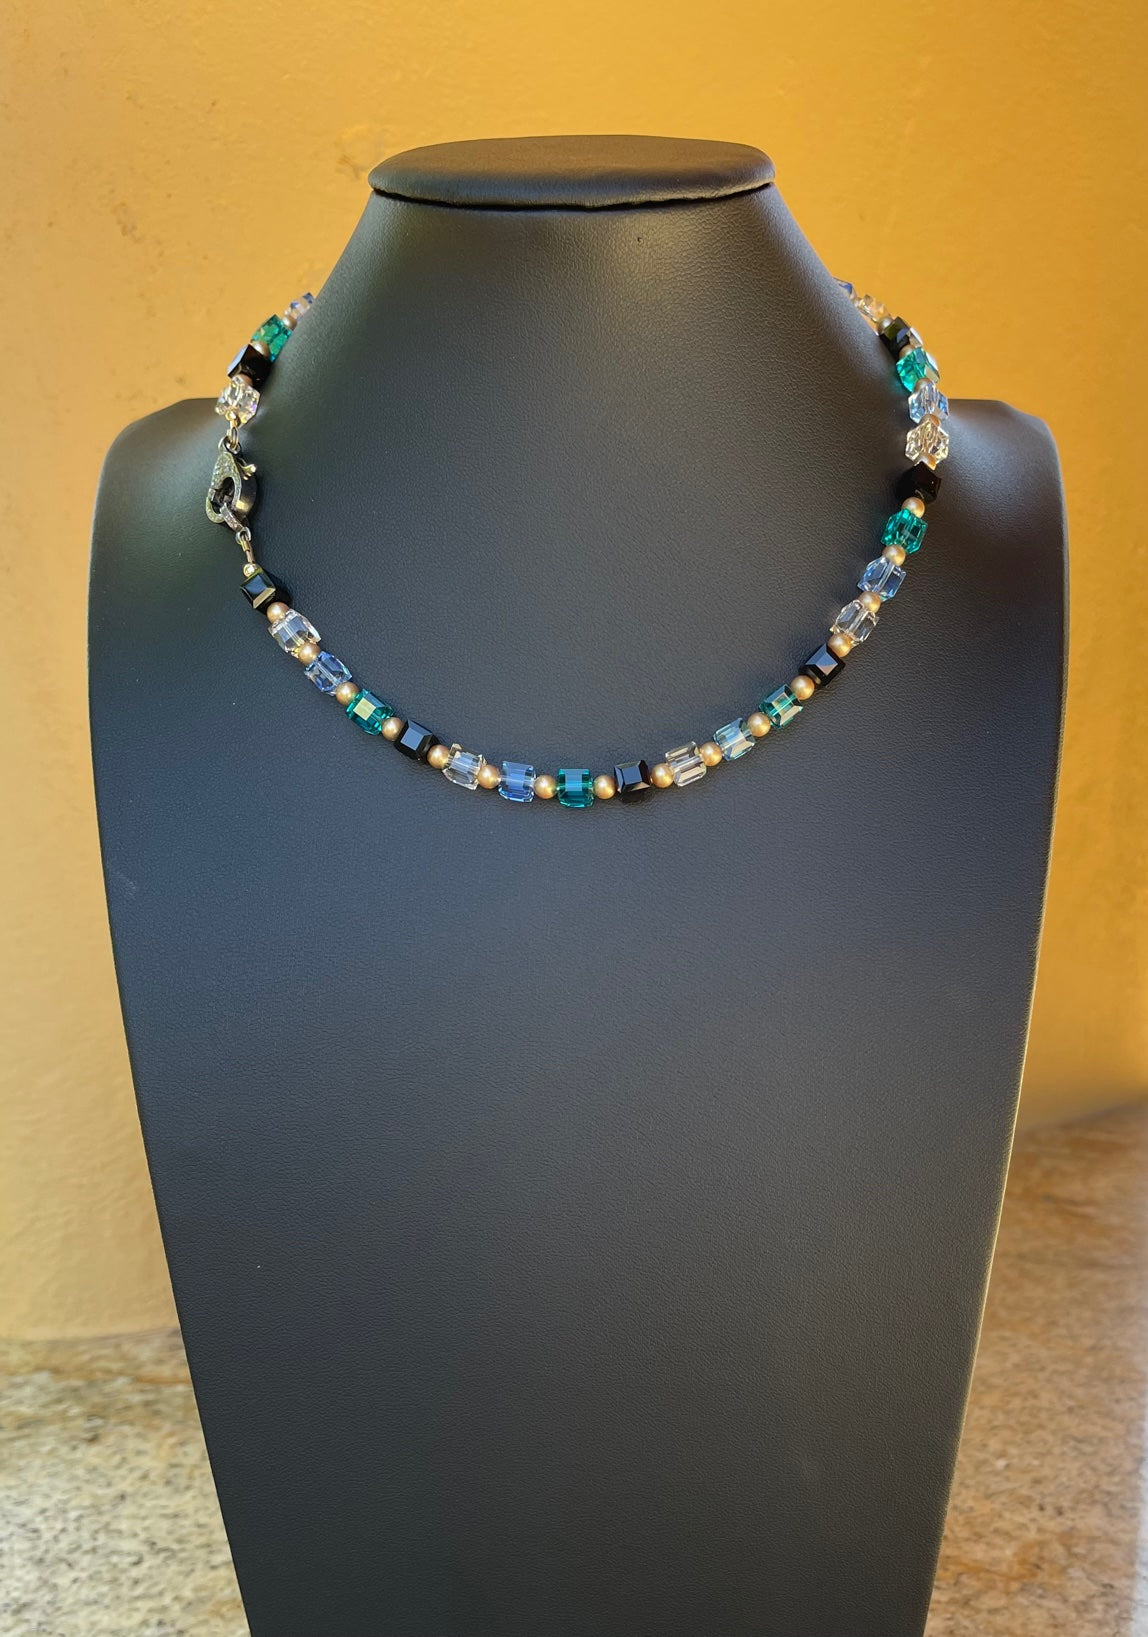 Necklace - Swarovski crystal necklace with an oxidized pave diamond clasp